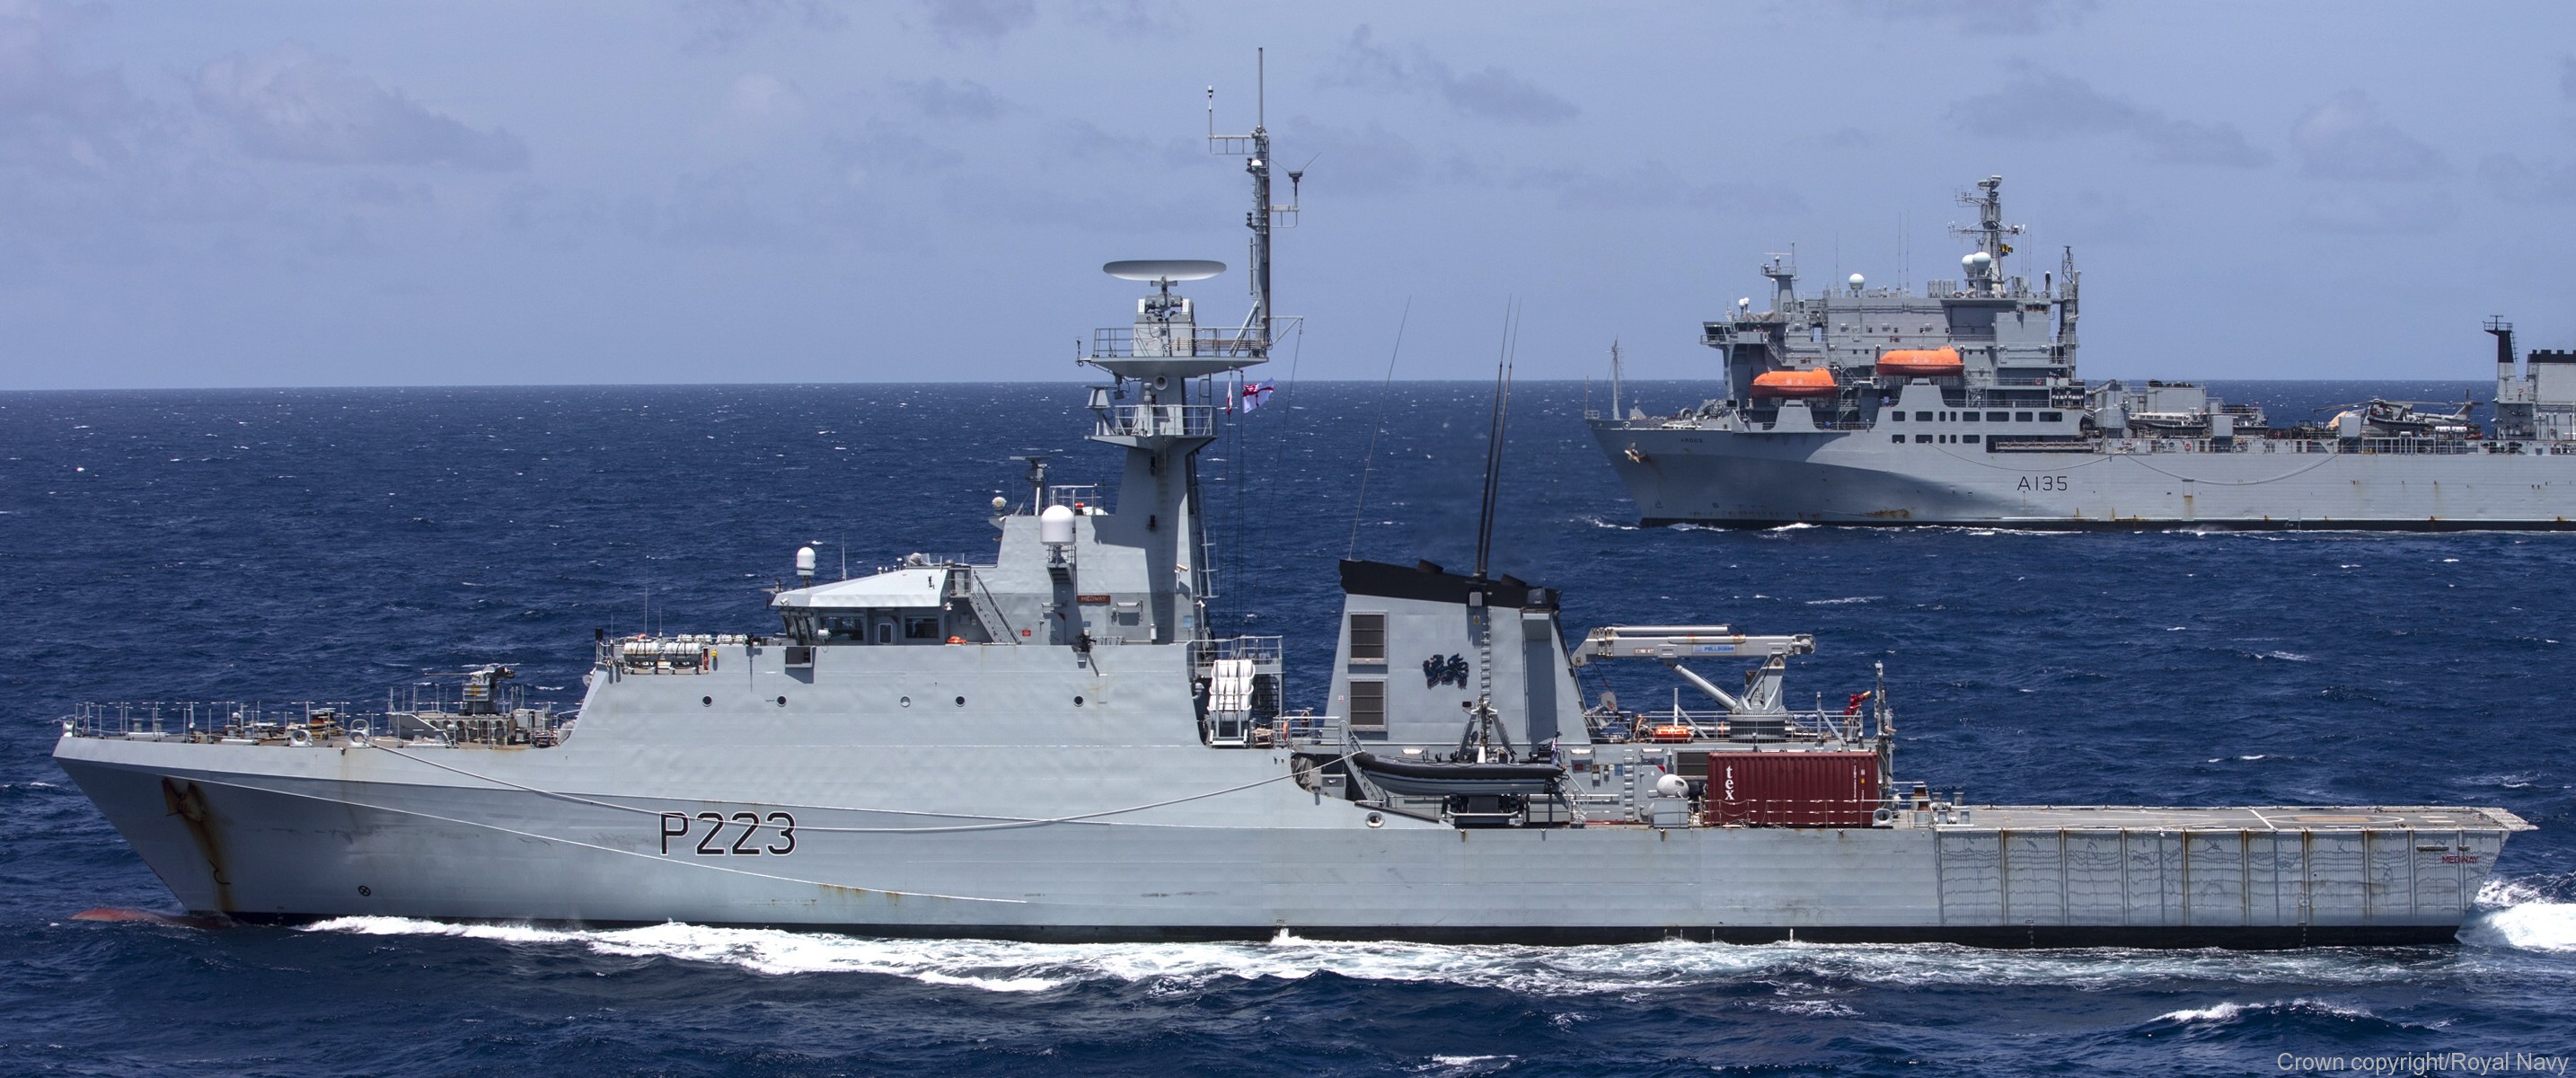 p223 hms medway river class offshore patrol vessel opv royal navy 16